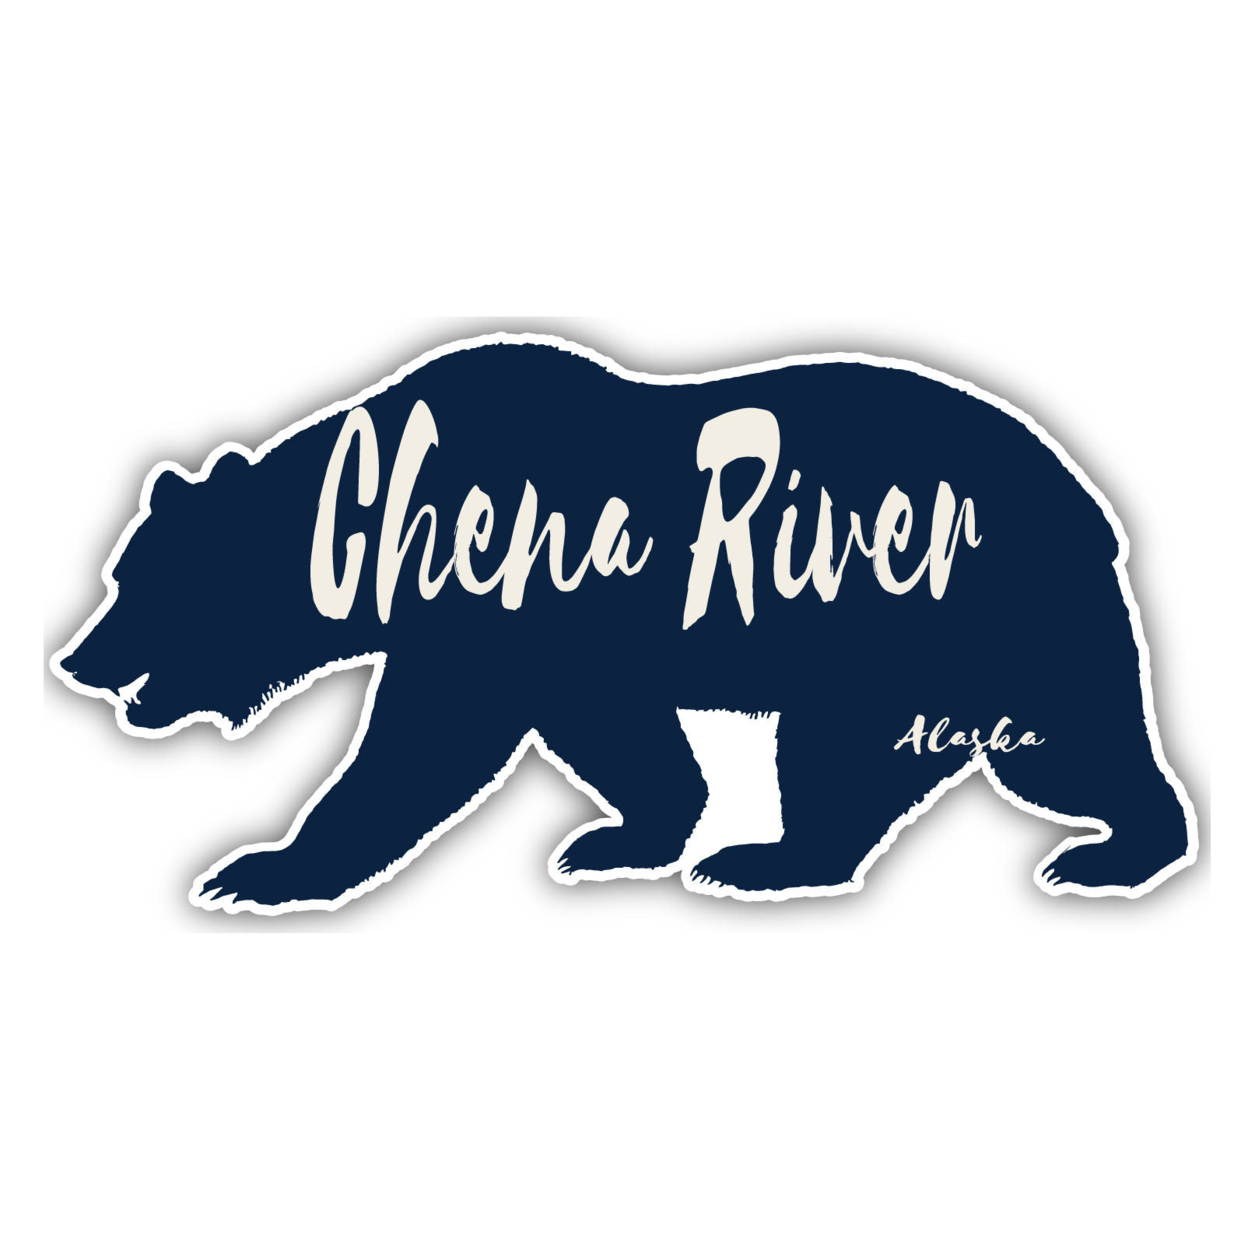 Chena River Alaska Souvenir Decorative Stickers (Choose Theme And Size) - Single Unit, 12-Inch, Bear